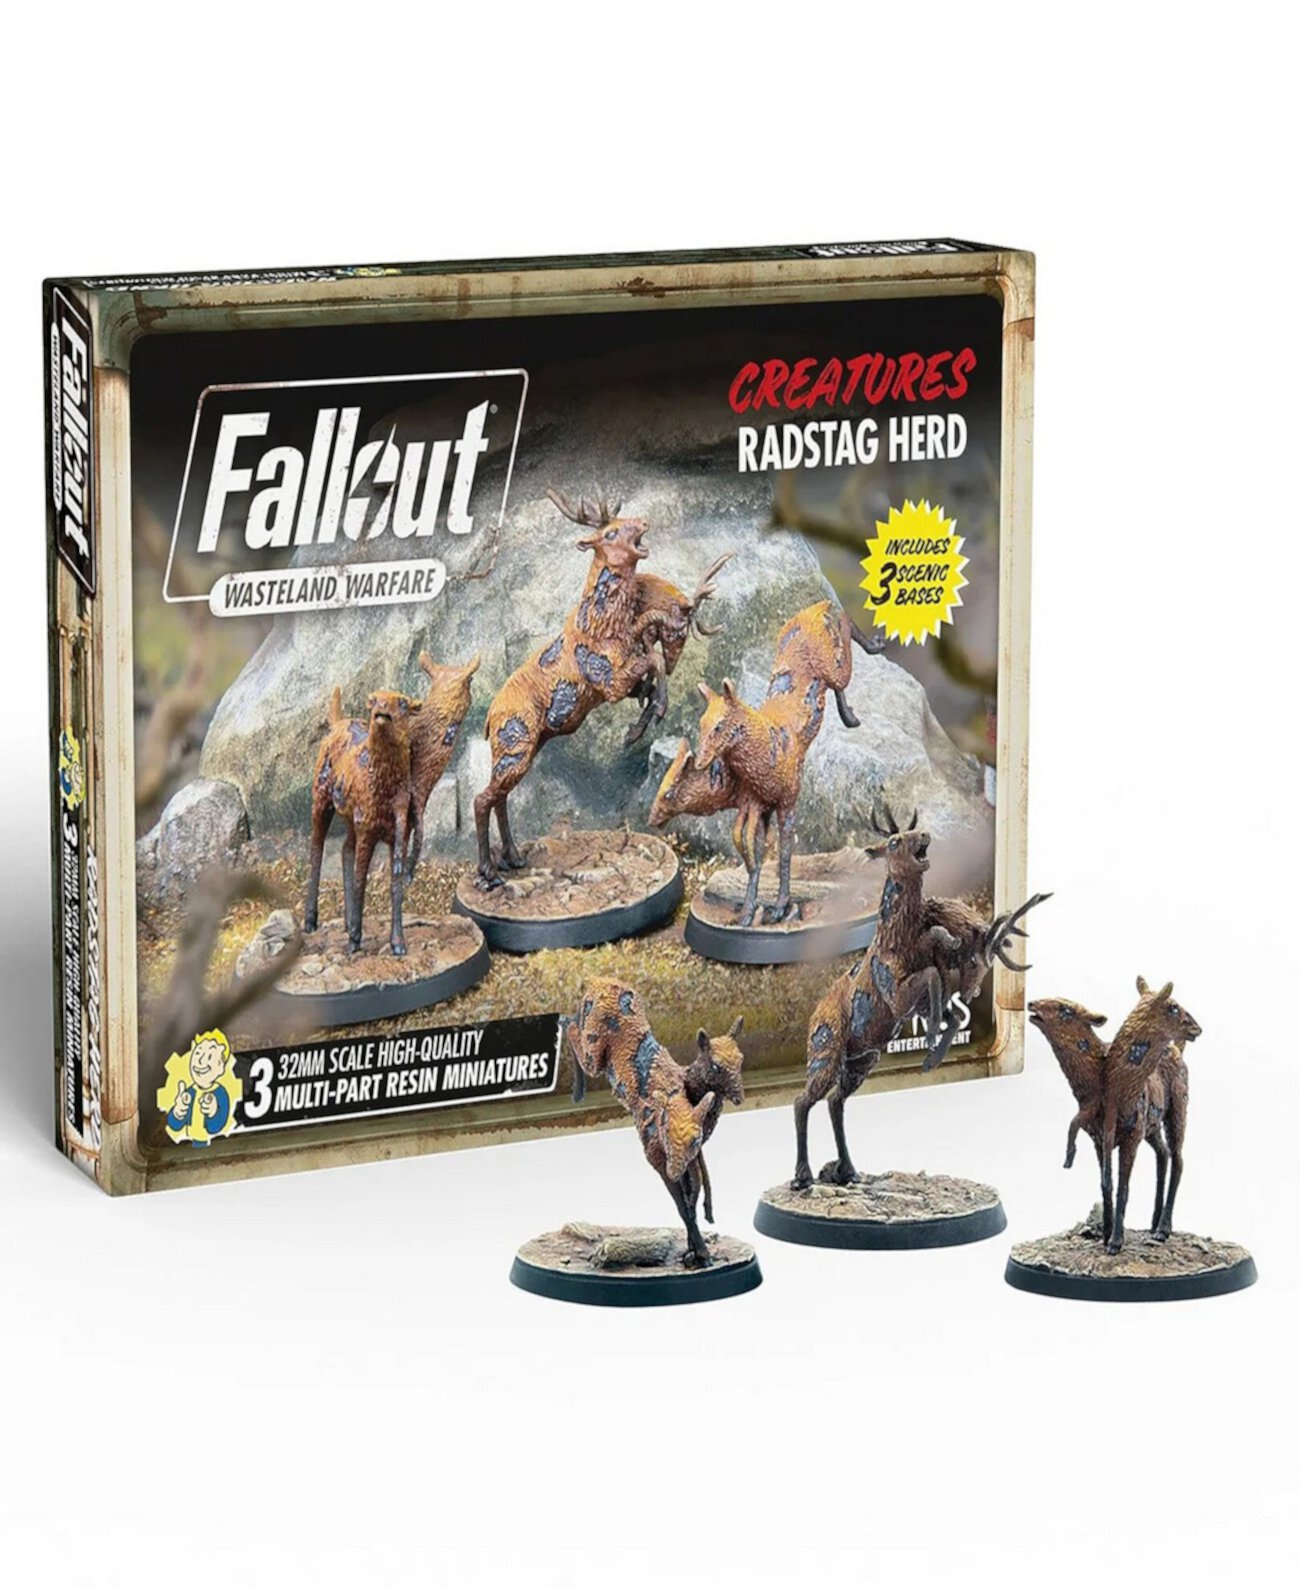 Fallout Wasteland Warfare Creatures Radstag Herd 3 фигурки Modiphius